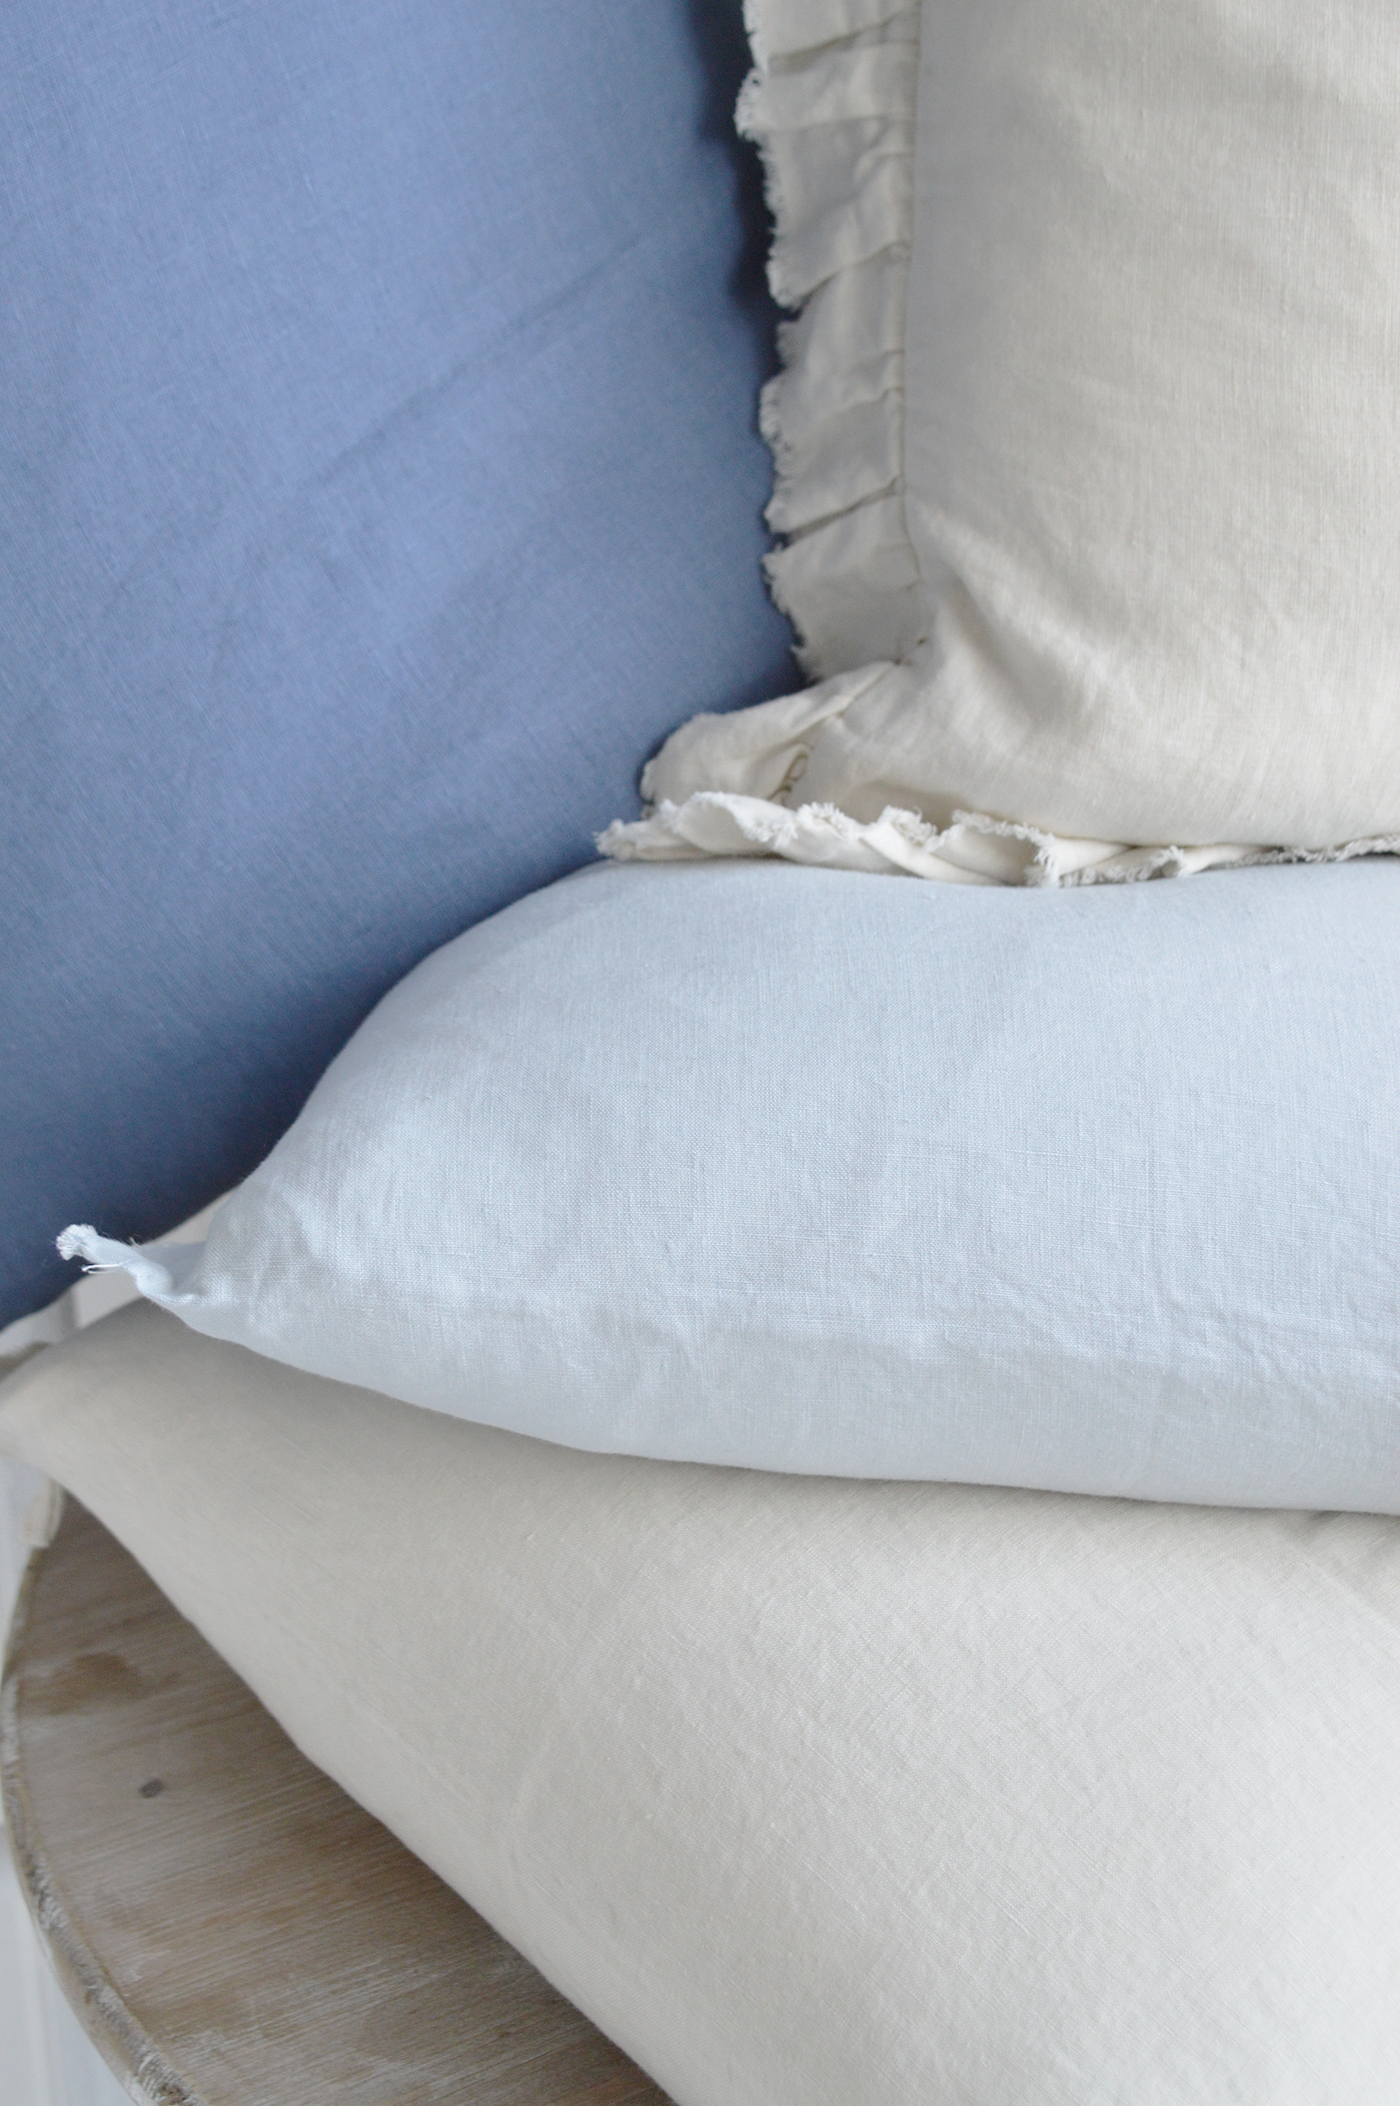 New England cushions and soft furnishings. Hamilton 100% Linen Cushion Covers for coastal, beach house and modern farmhouse interiors - navy and cream